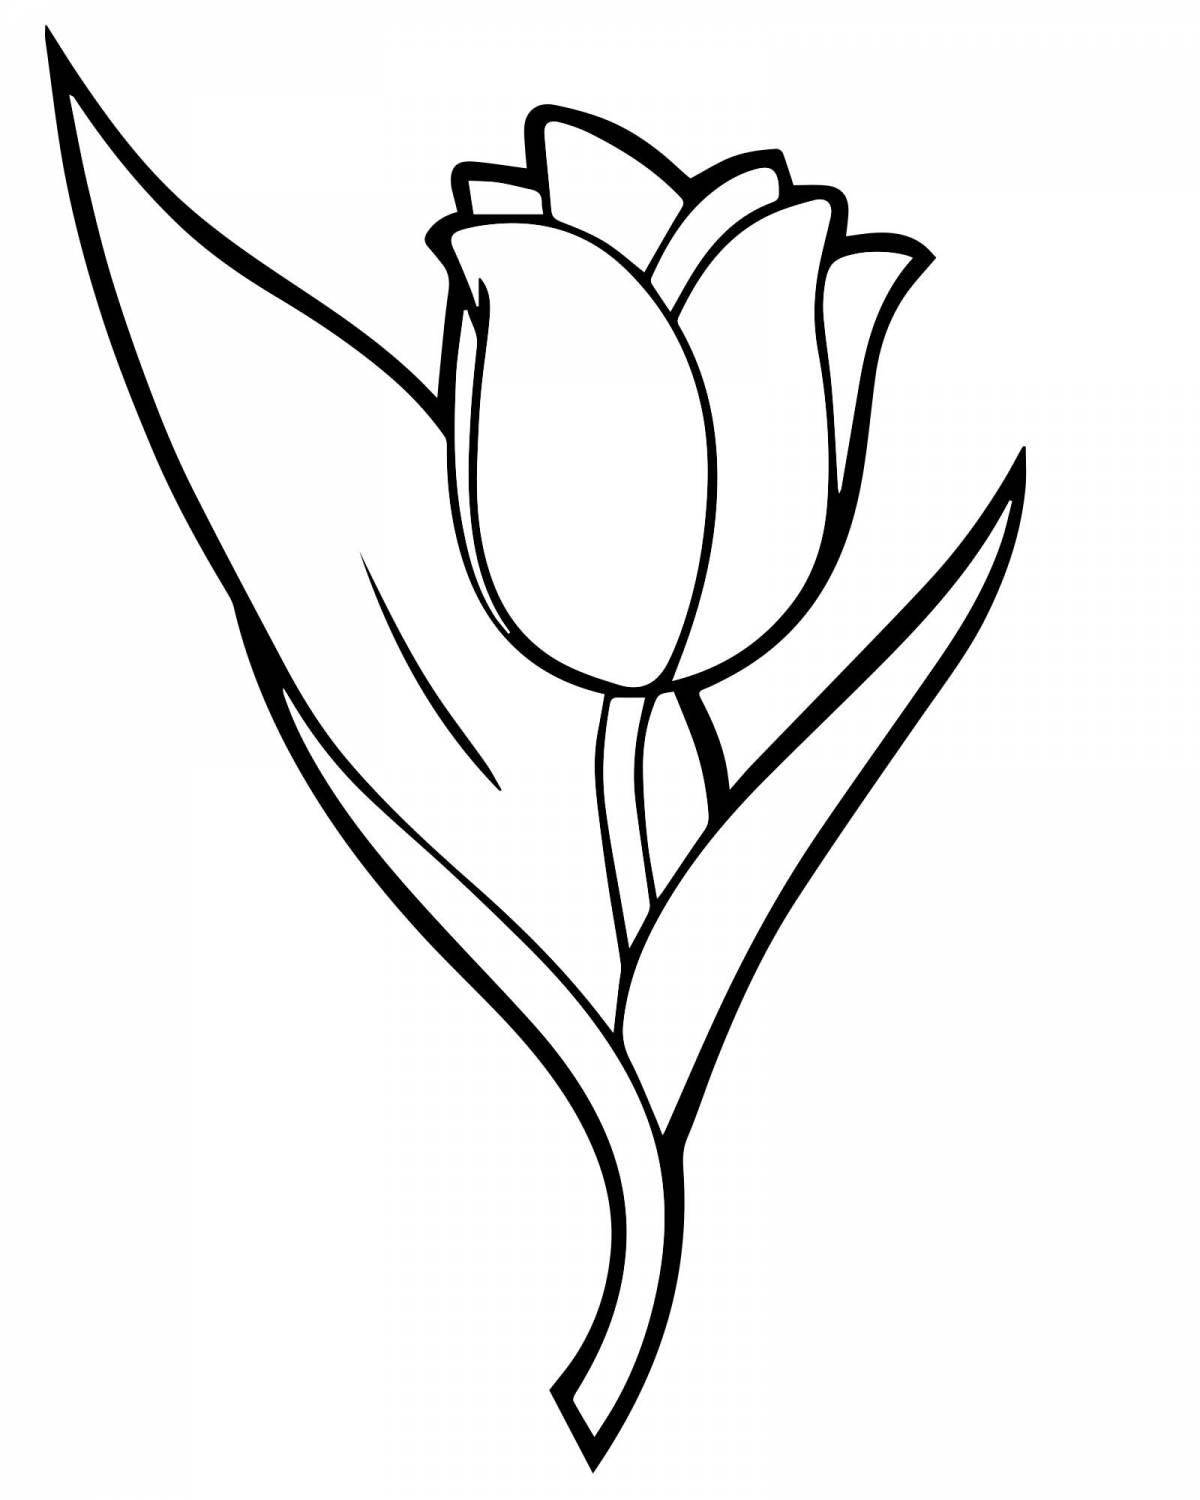 Adorable tulip coloring page